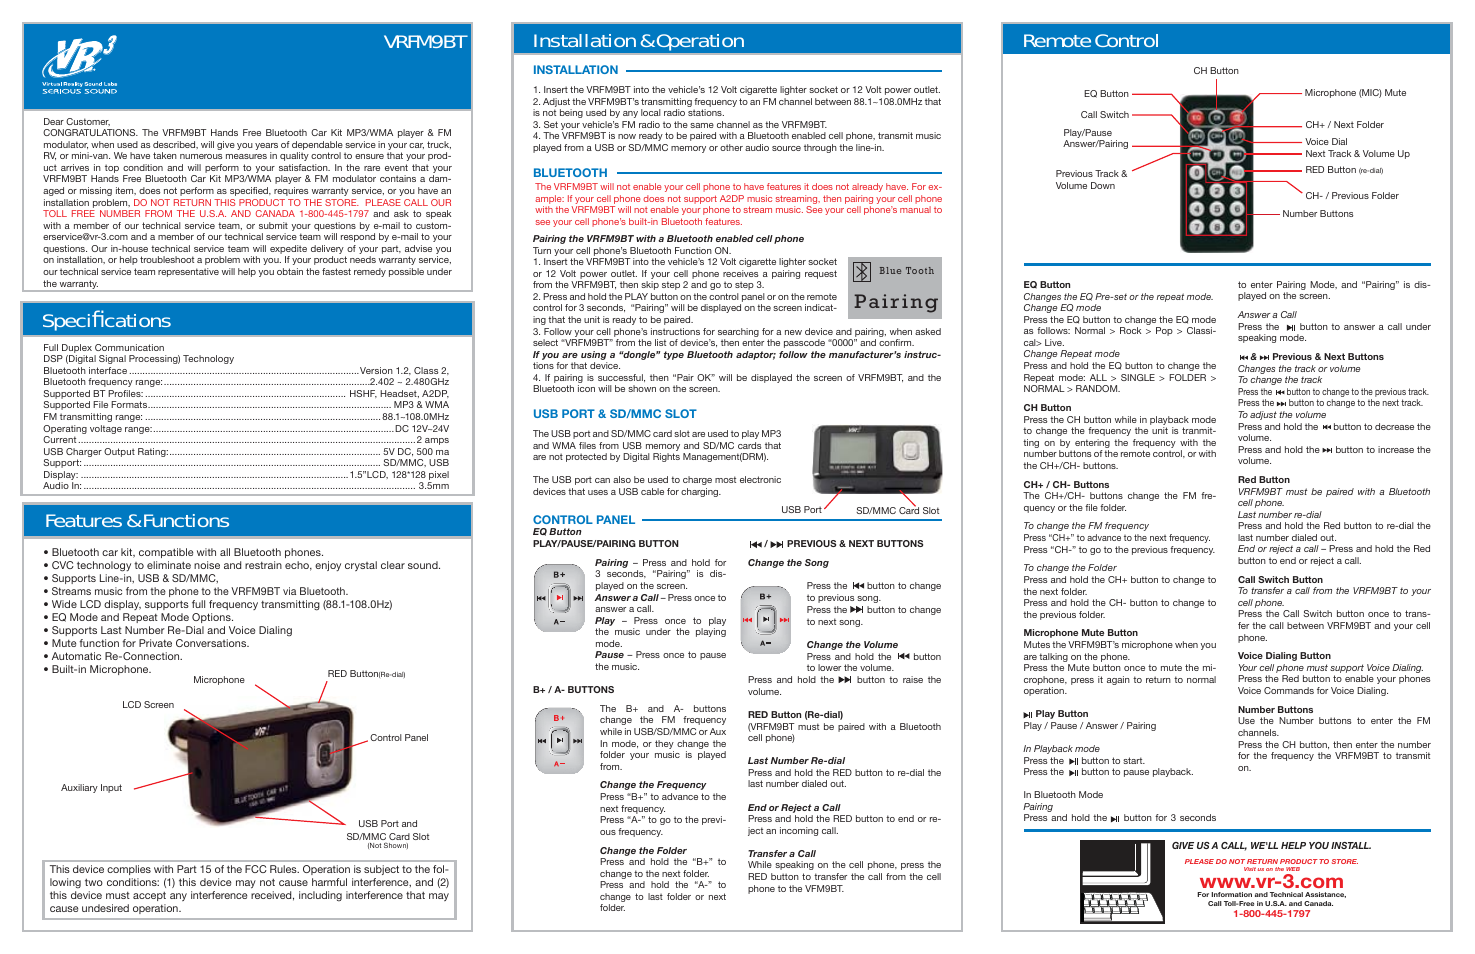 Hands Free Bluetooth Car Kit MP3/WMA player & FM modulator VRFM9BT